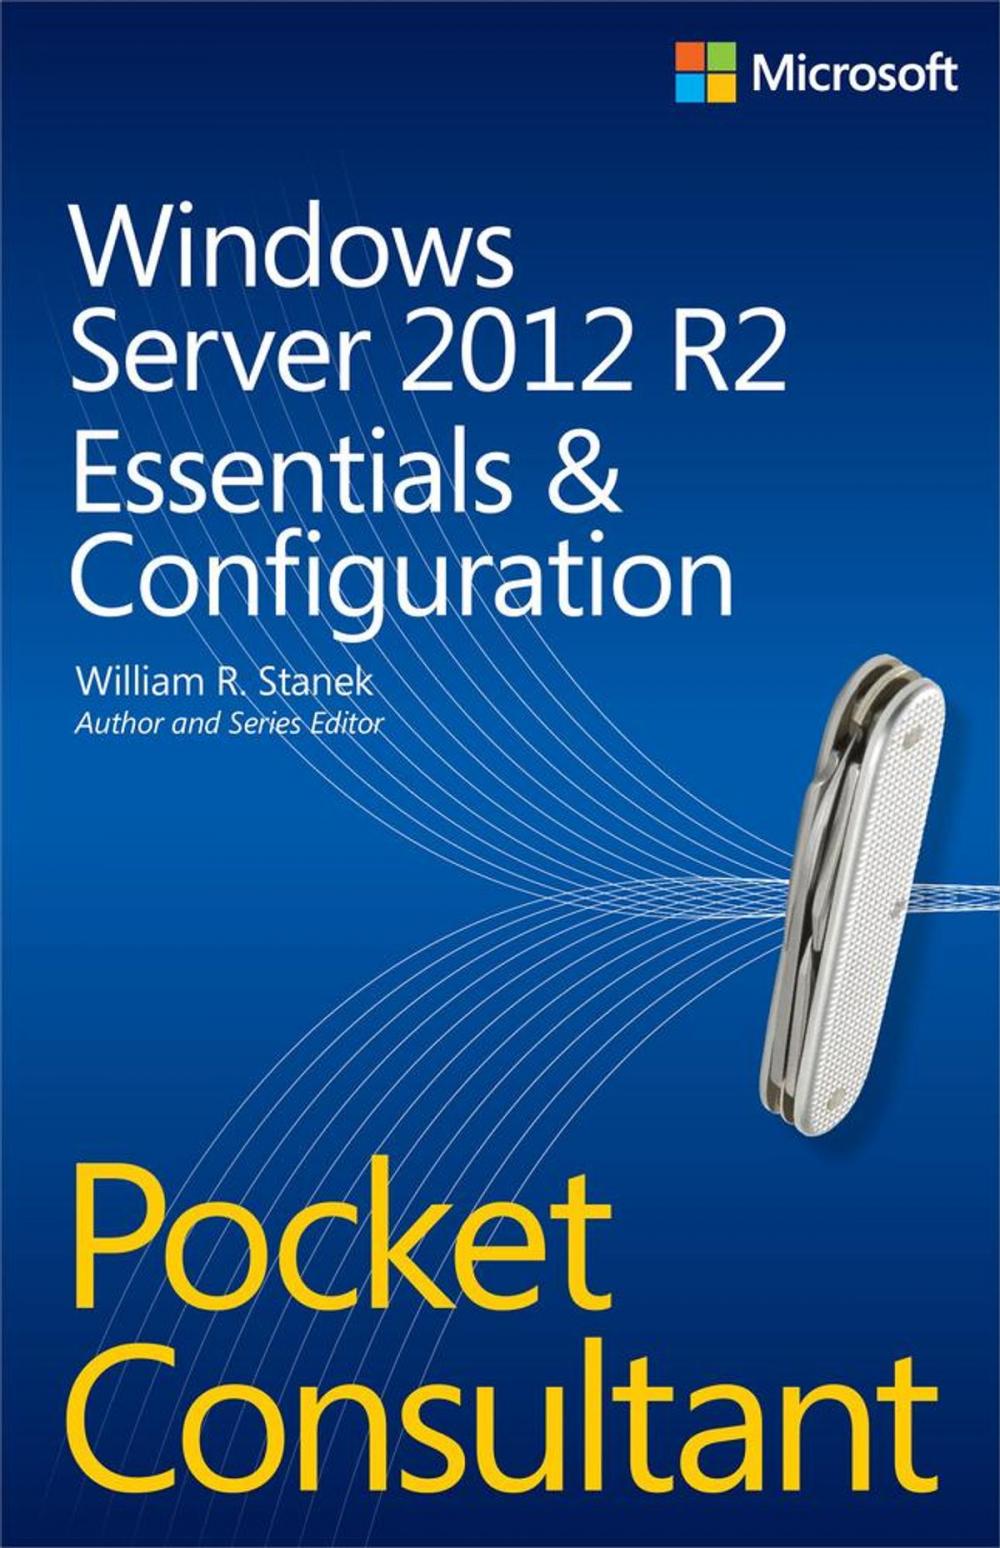 Big bigCover of Windows Server 2012 R2 Pocket Consultant Volume 1